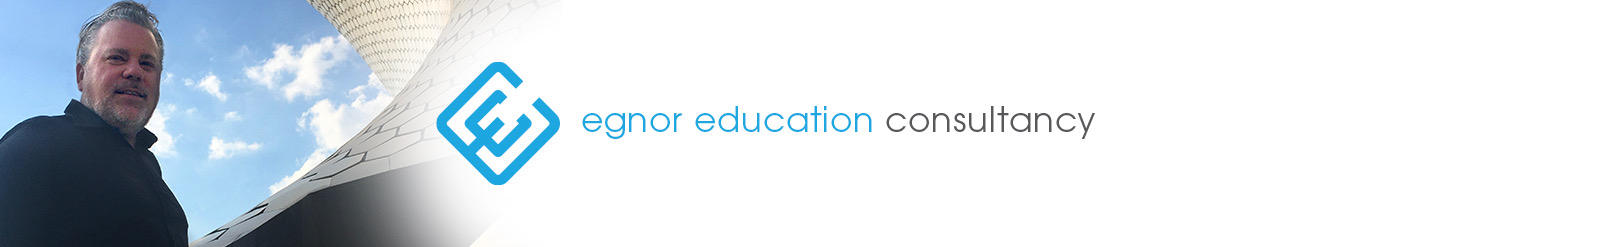 Egnor Education Consultancy